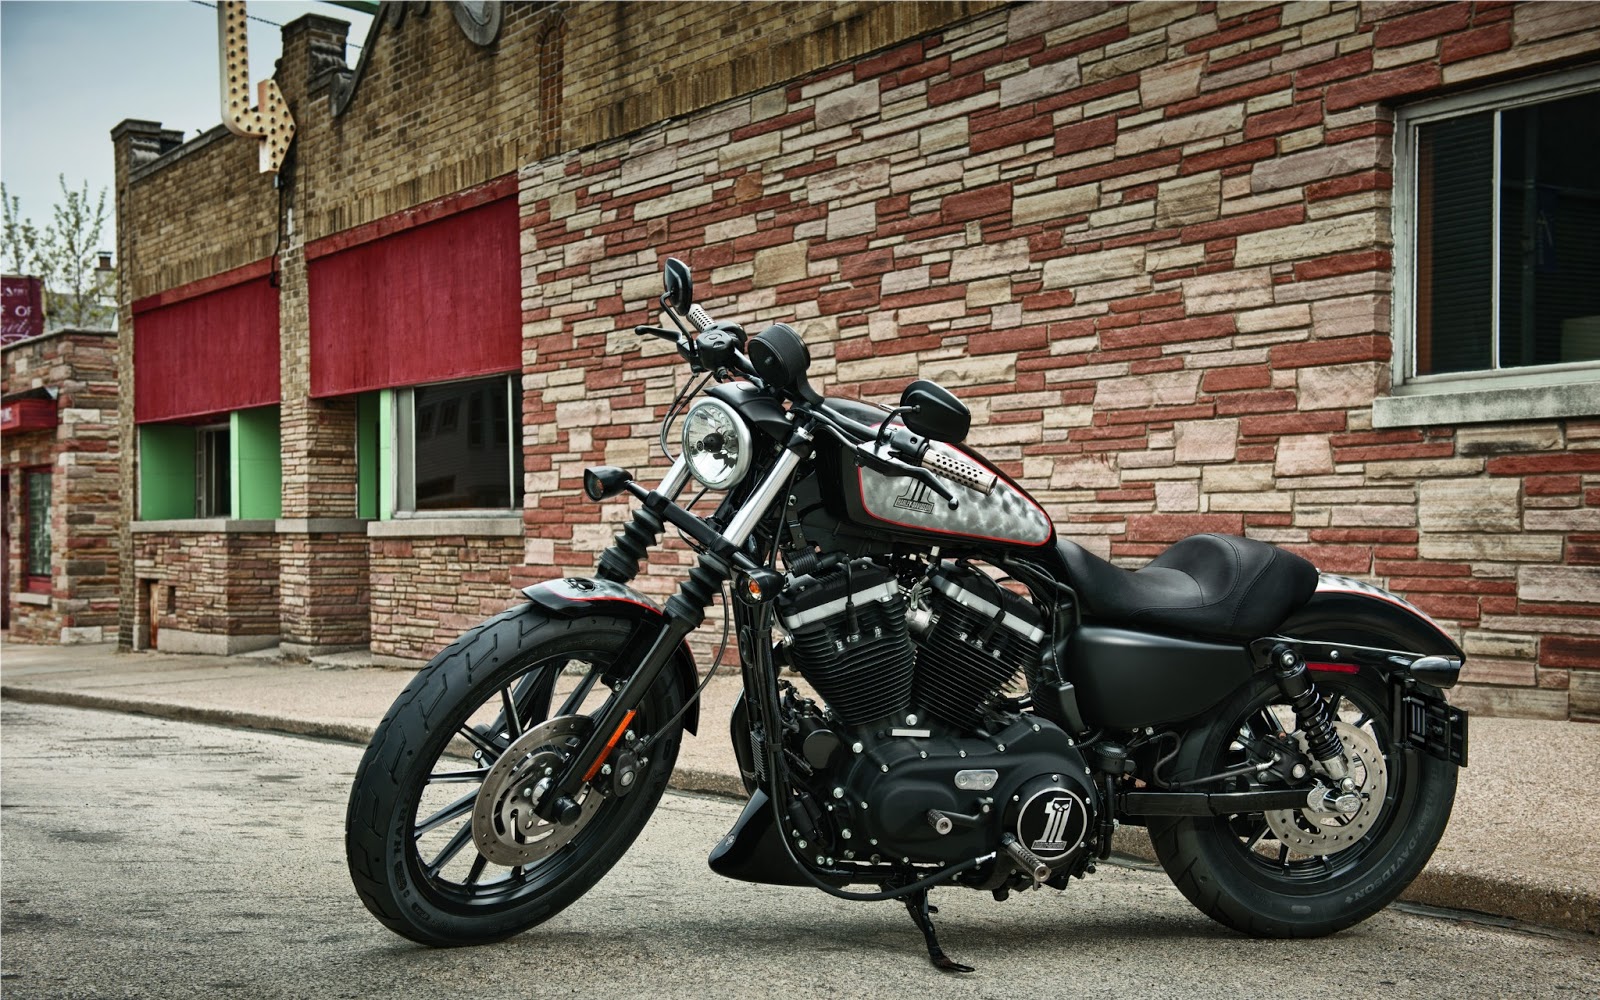 2012 Harley Davidson Xl883n Iron 883 1600x1000 Wallpaper Teahub Io